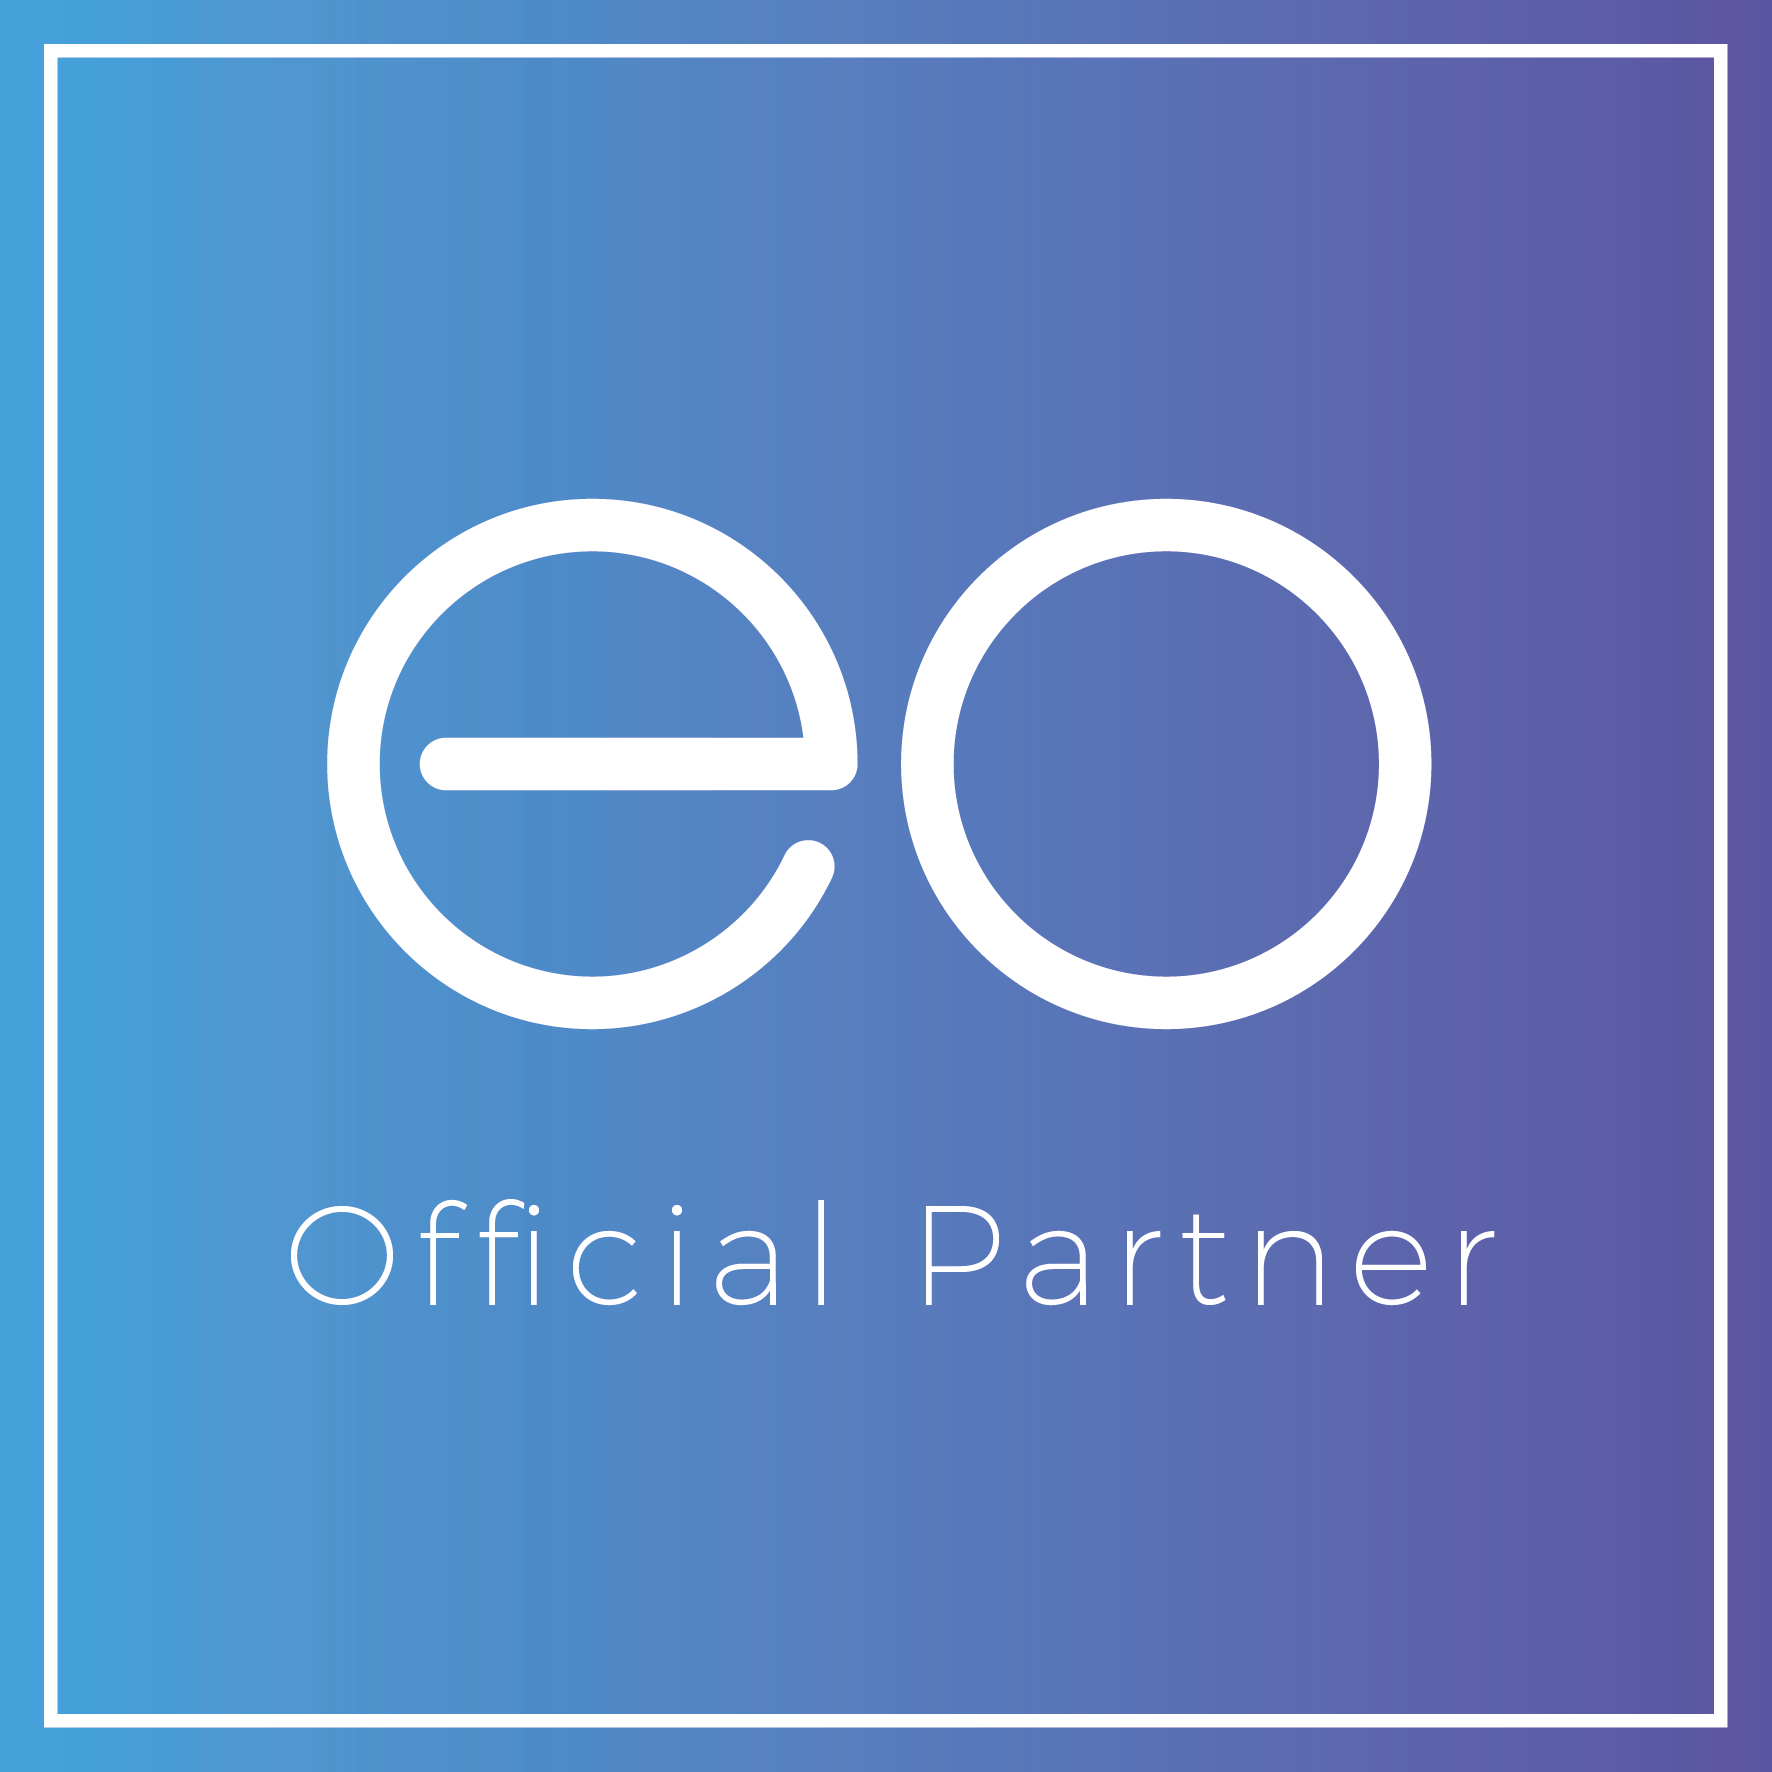 EO Official Partner logo